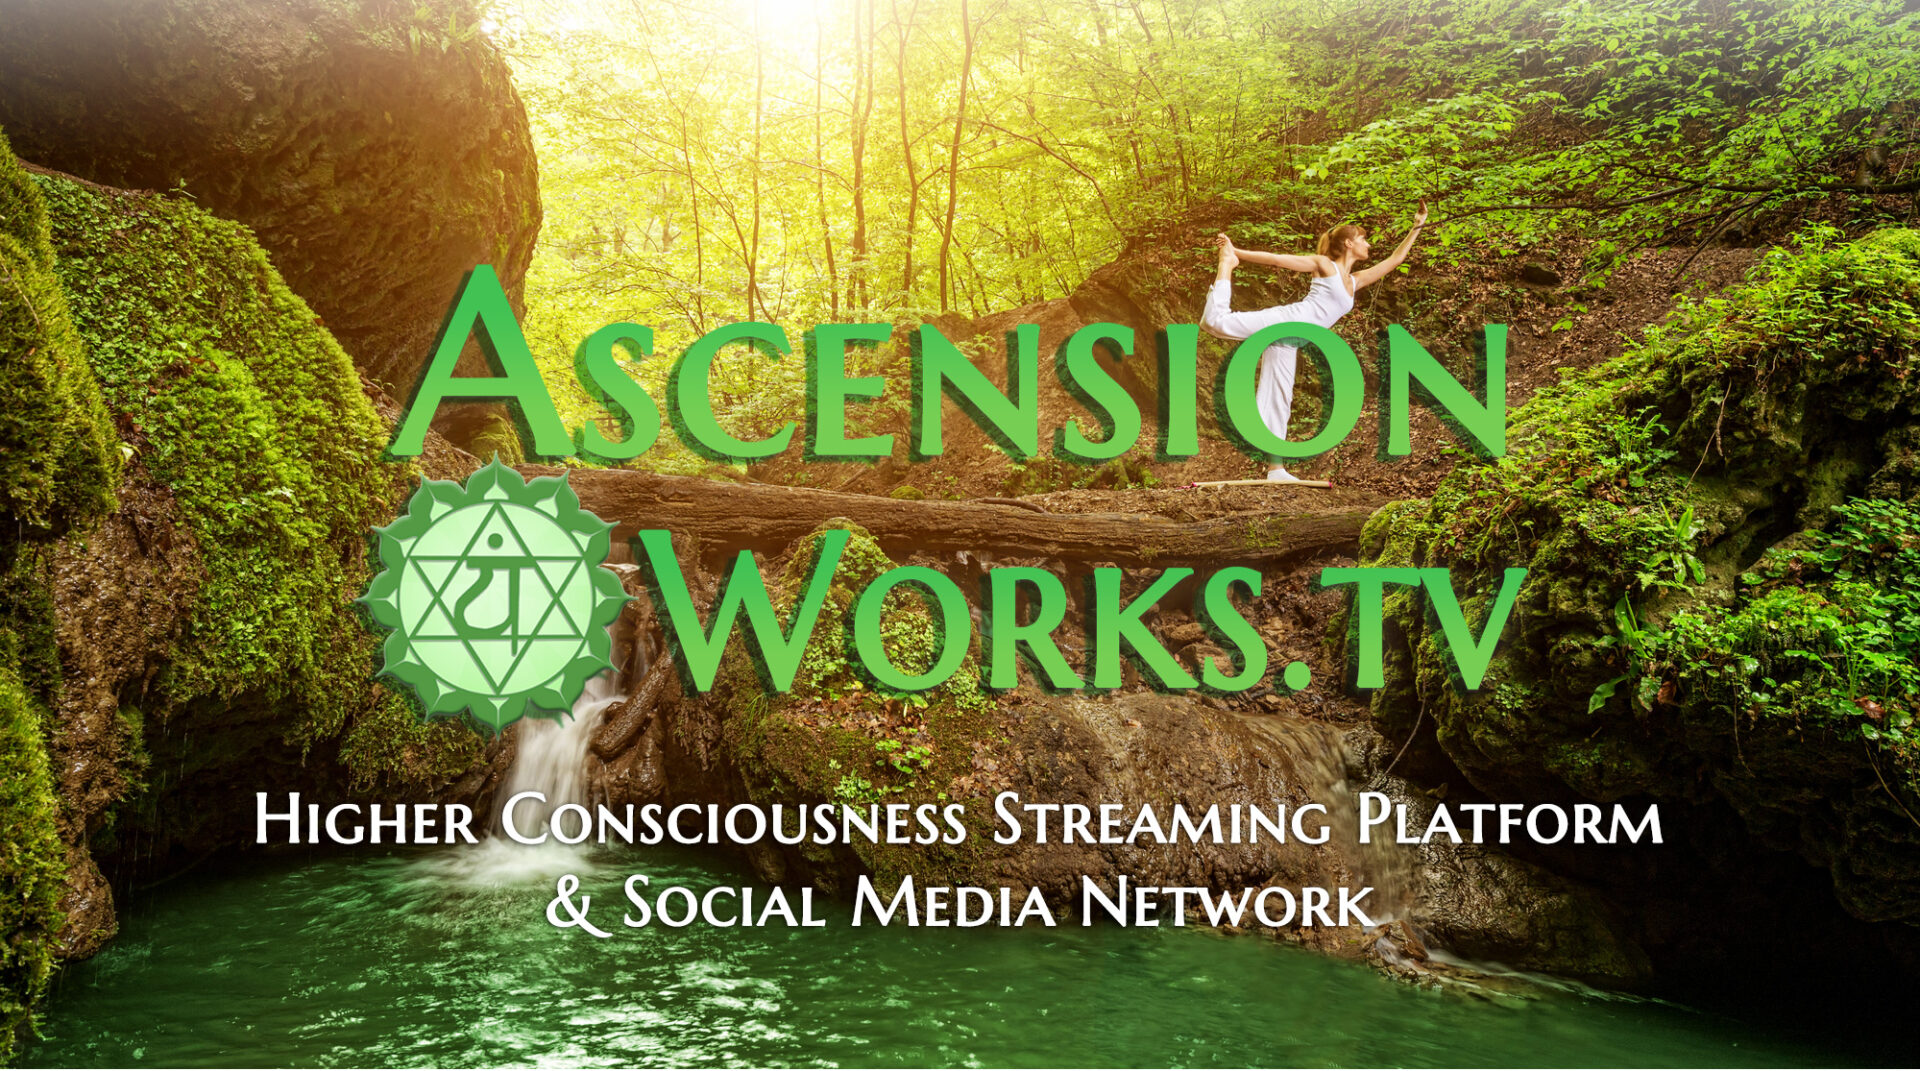 (c) Ascensionworks.tv